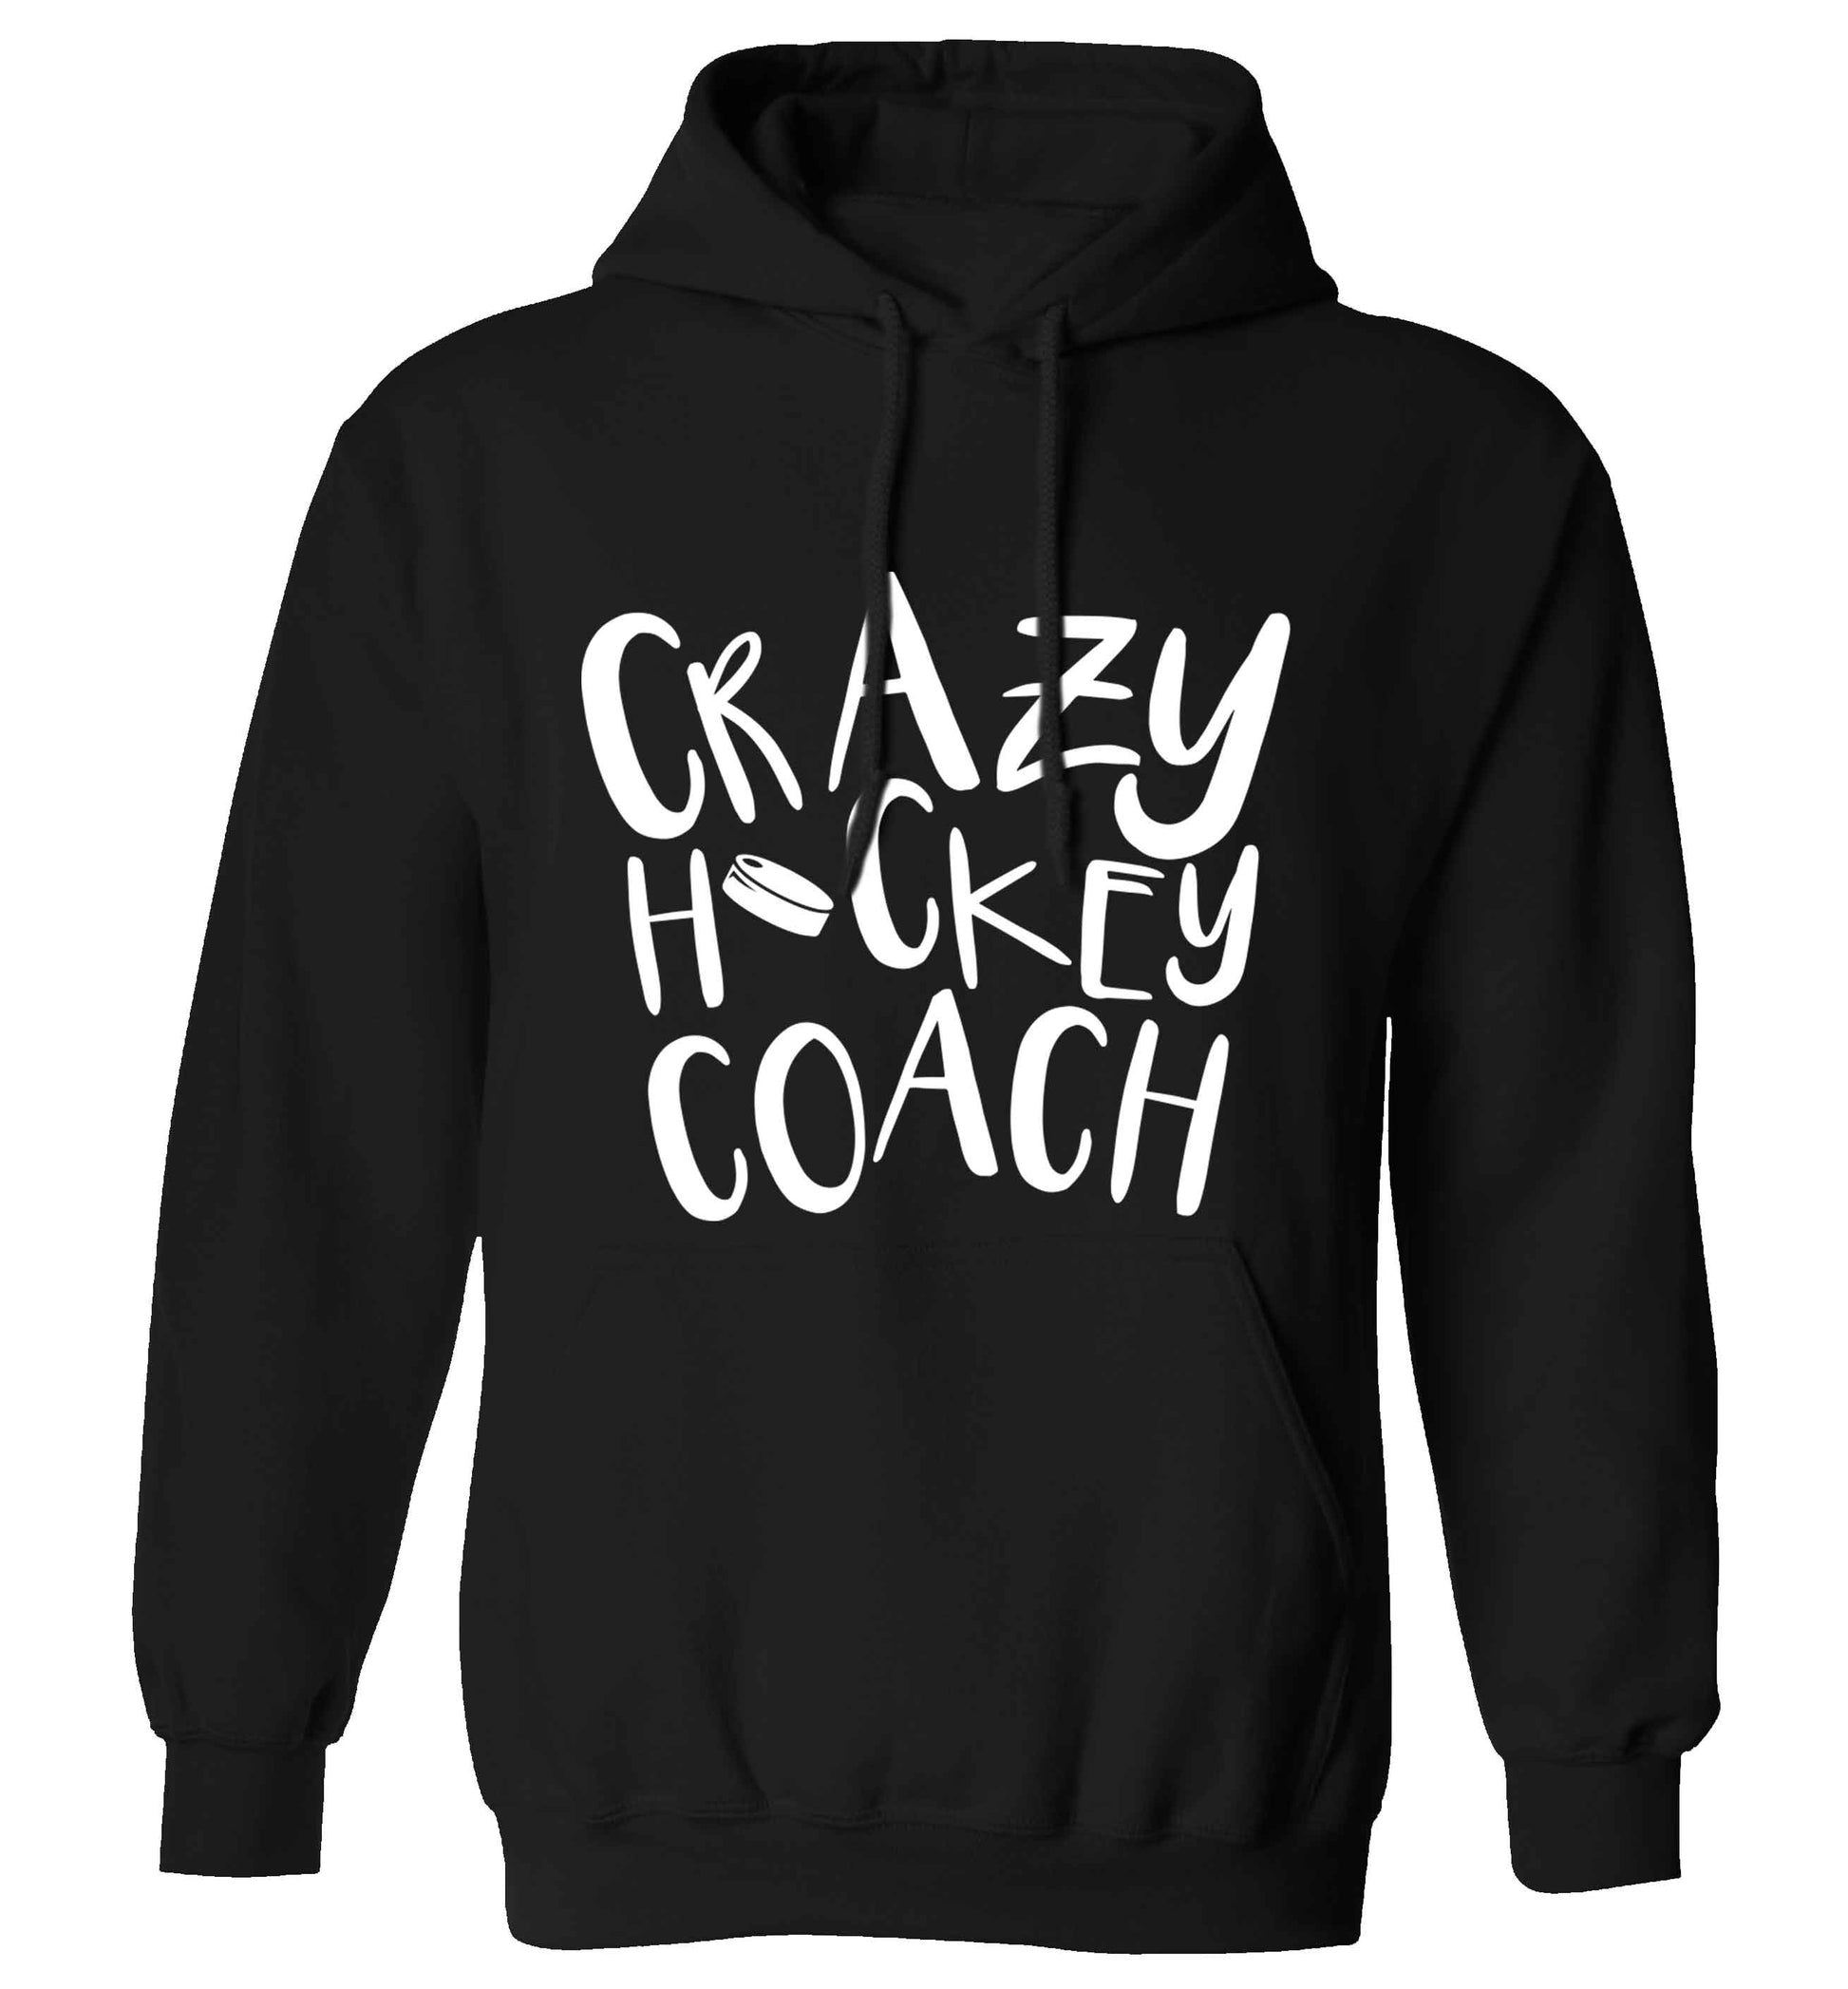 Crazy hockey coach adults unisex black hoodie 2XL